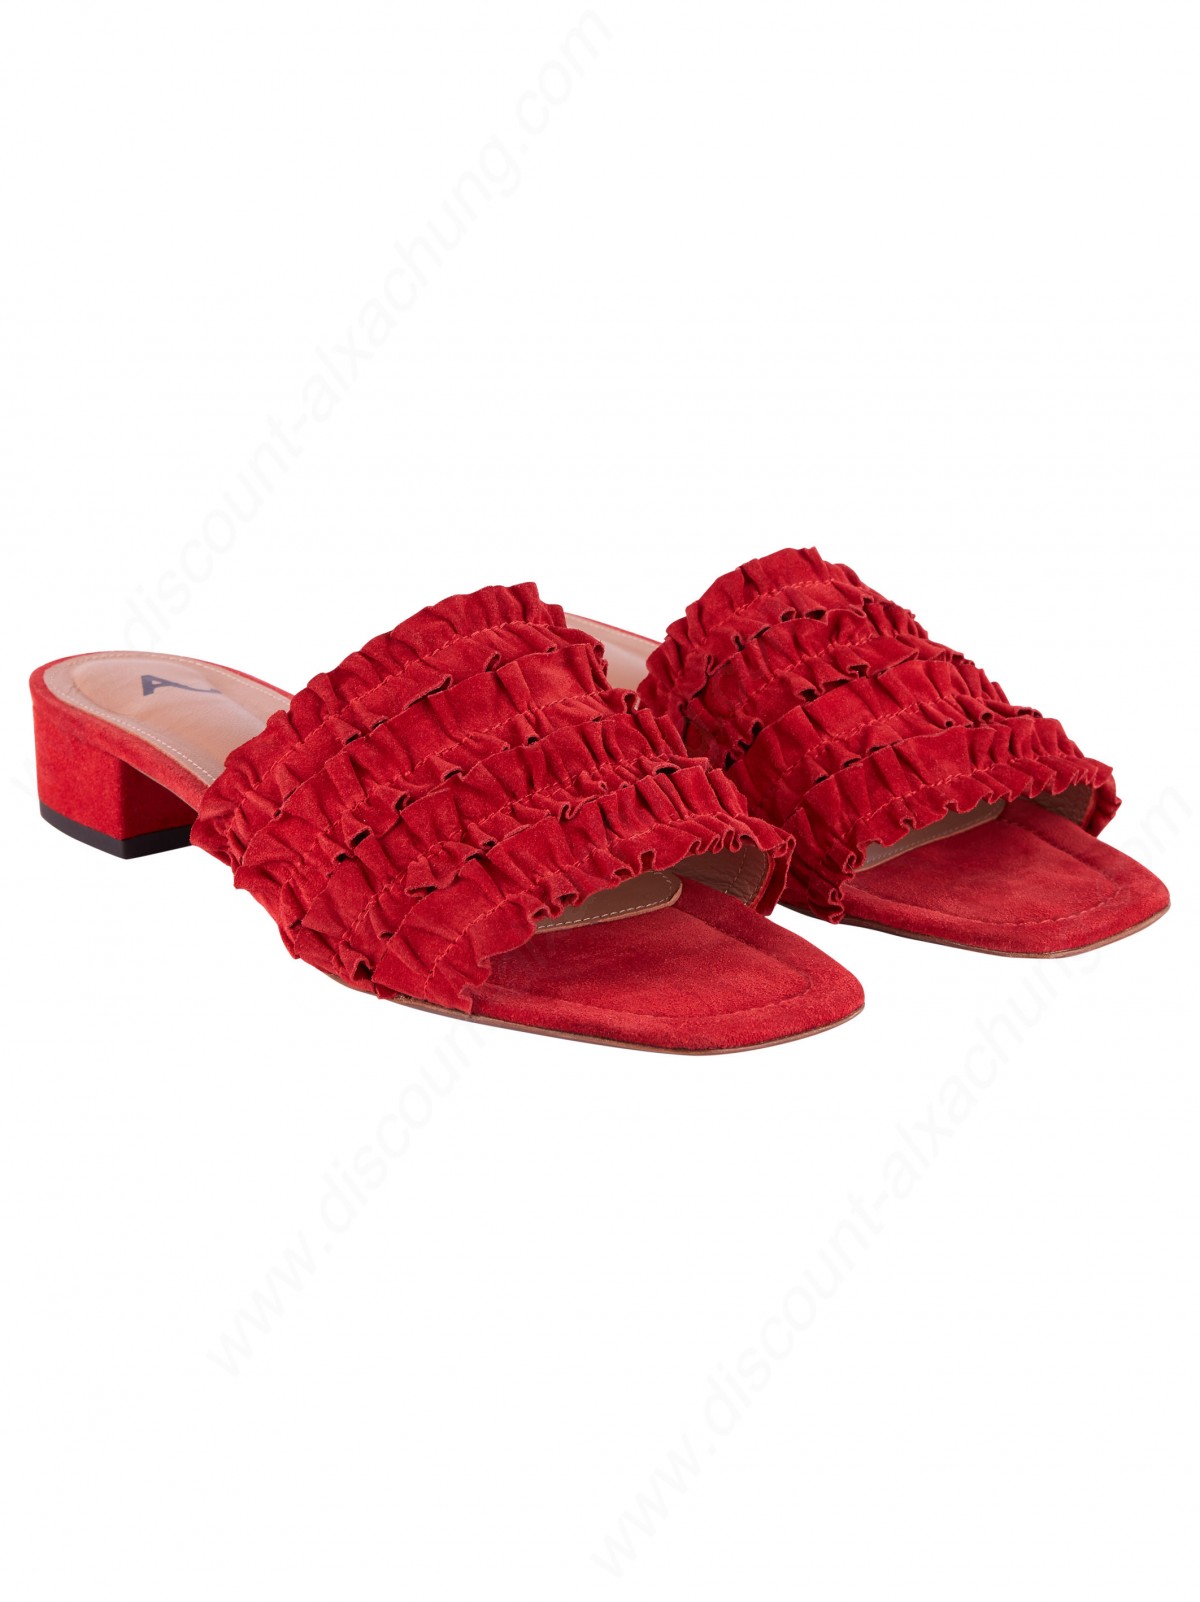 Alexachung Red Ruffle Sandal - -2